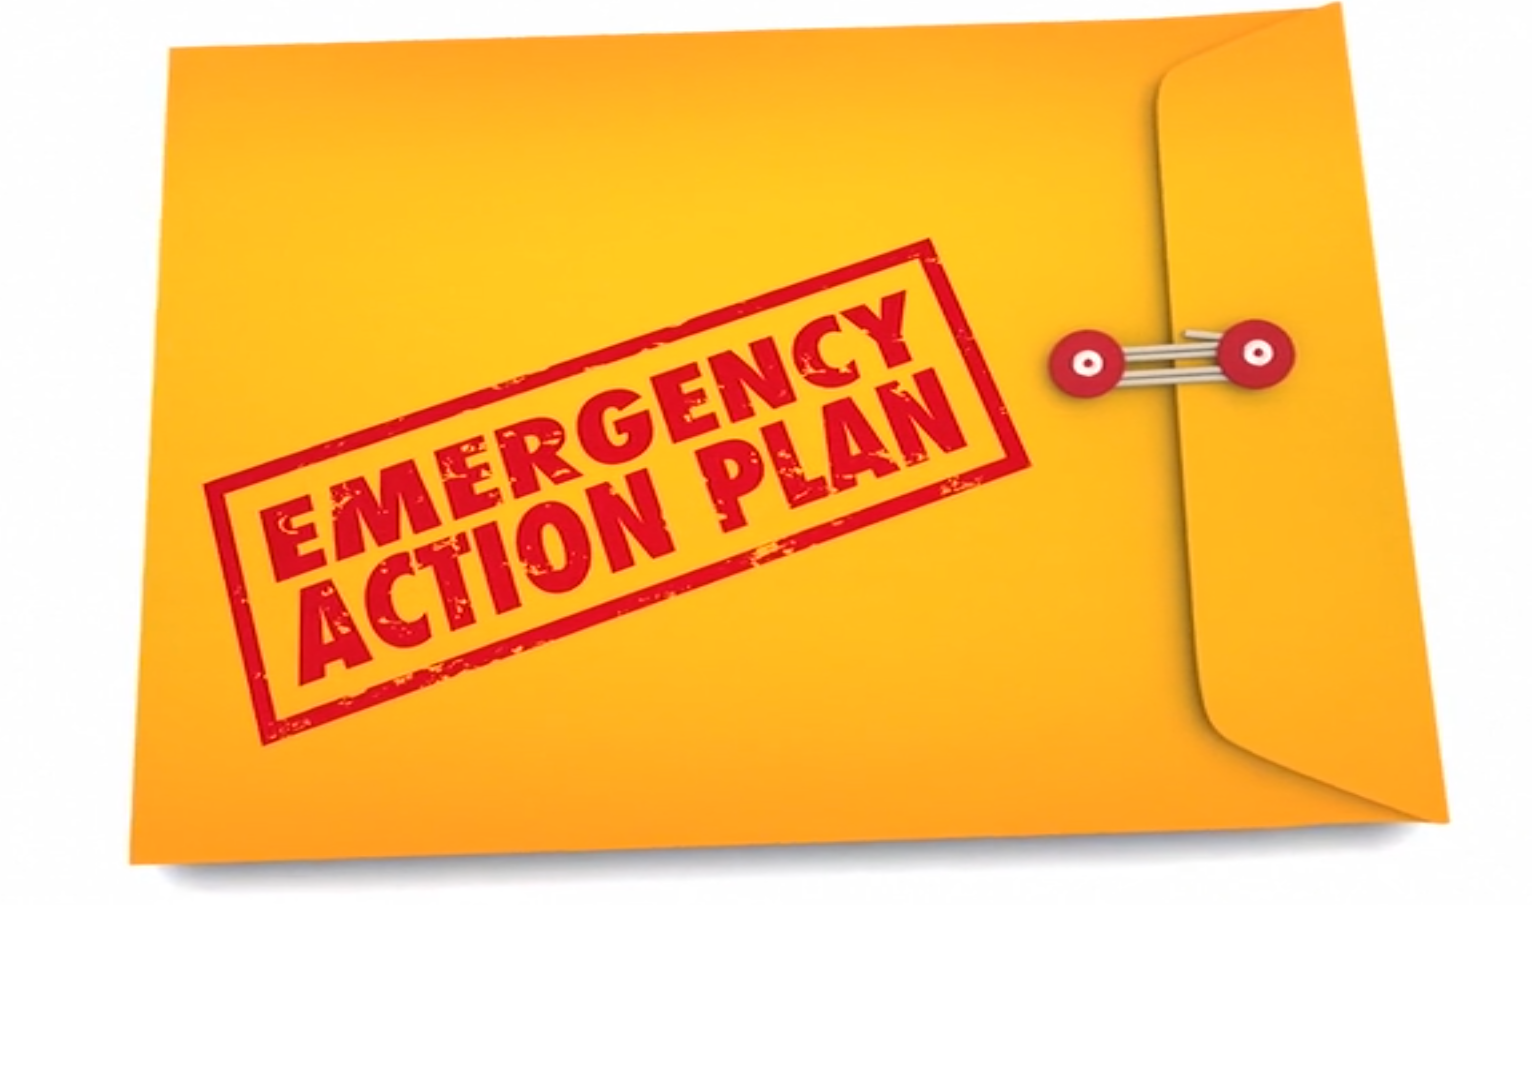 action plan clip art